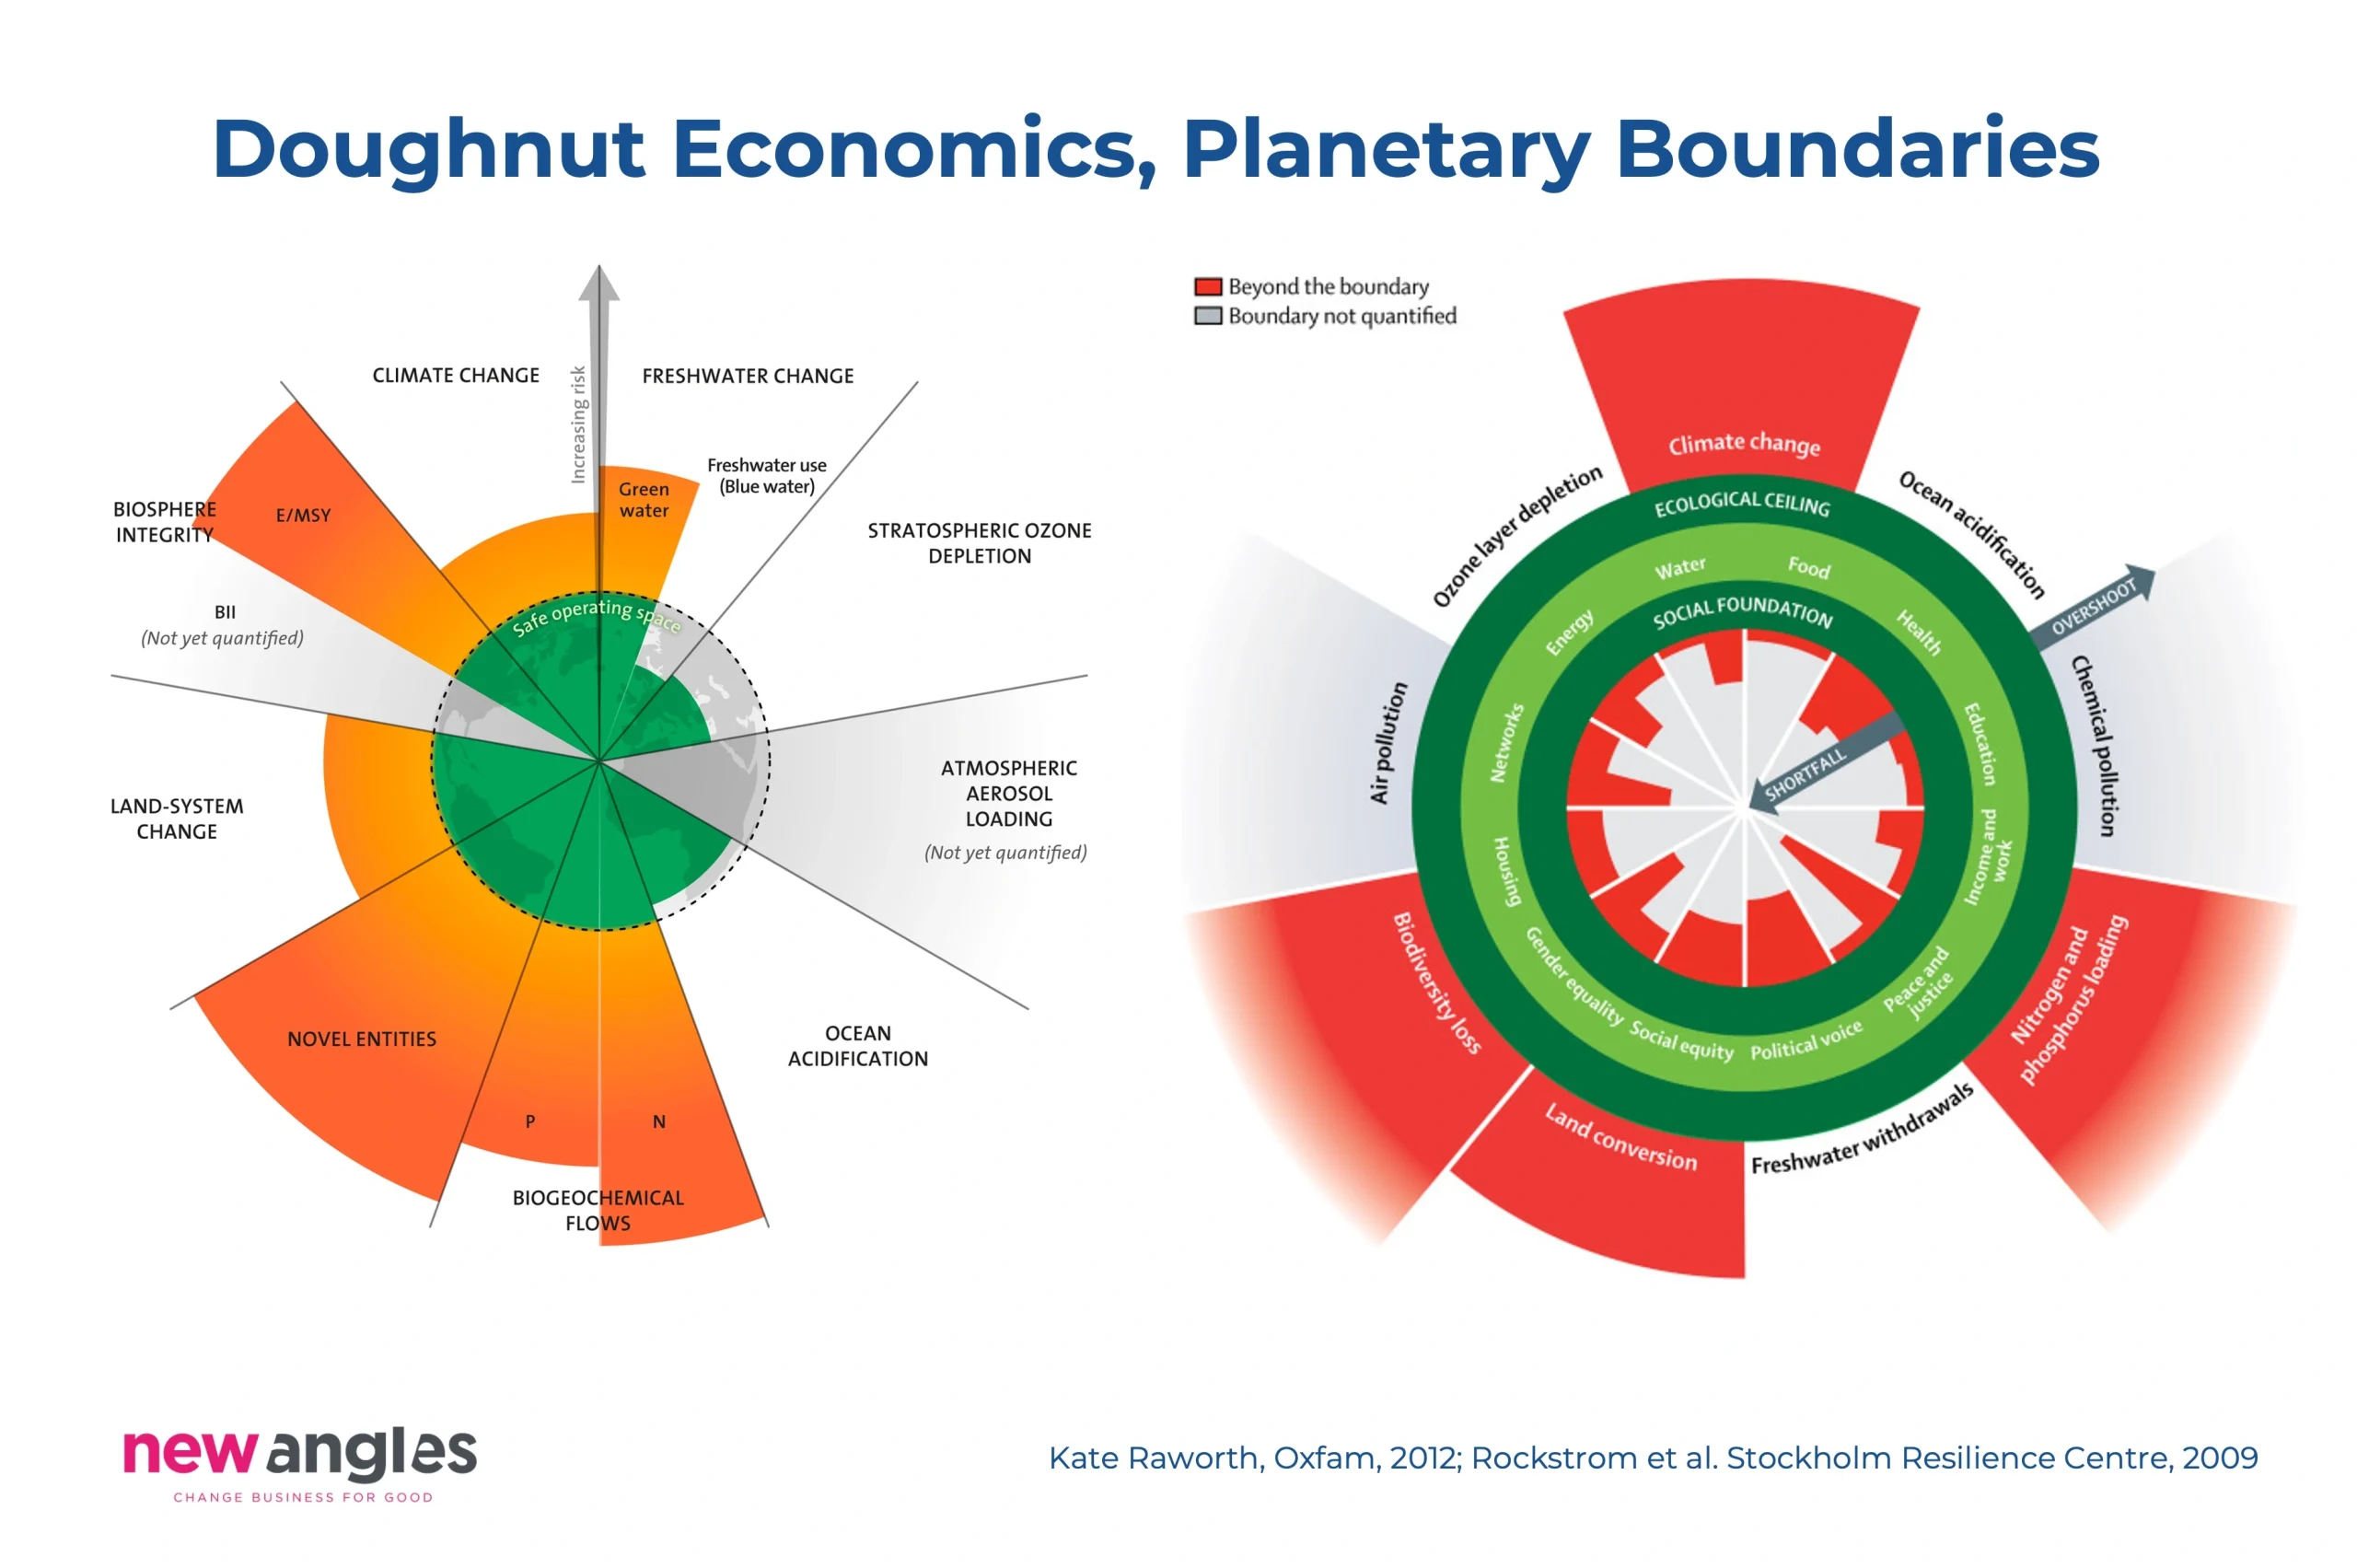 Doughnut economics chart and Planetary boundaries model